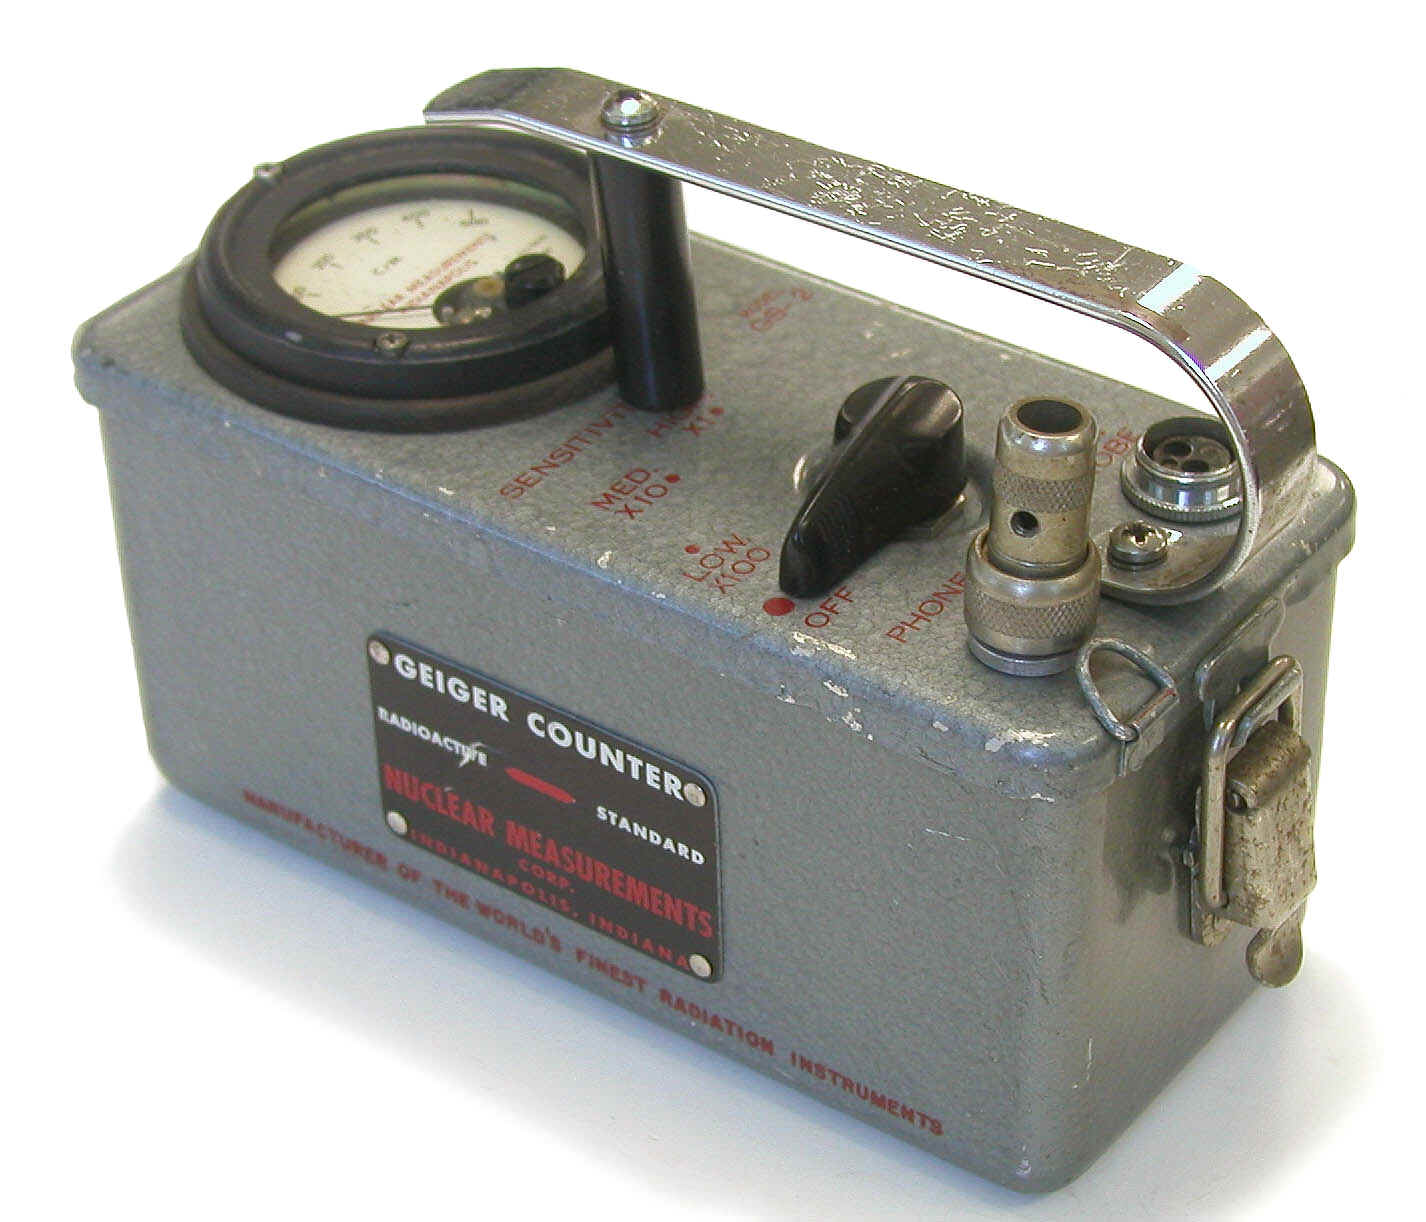 Nuclear Measurements Model GS-2 GM (ca. 1955-1960)